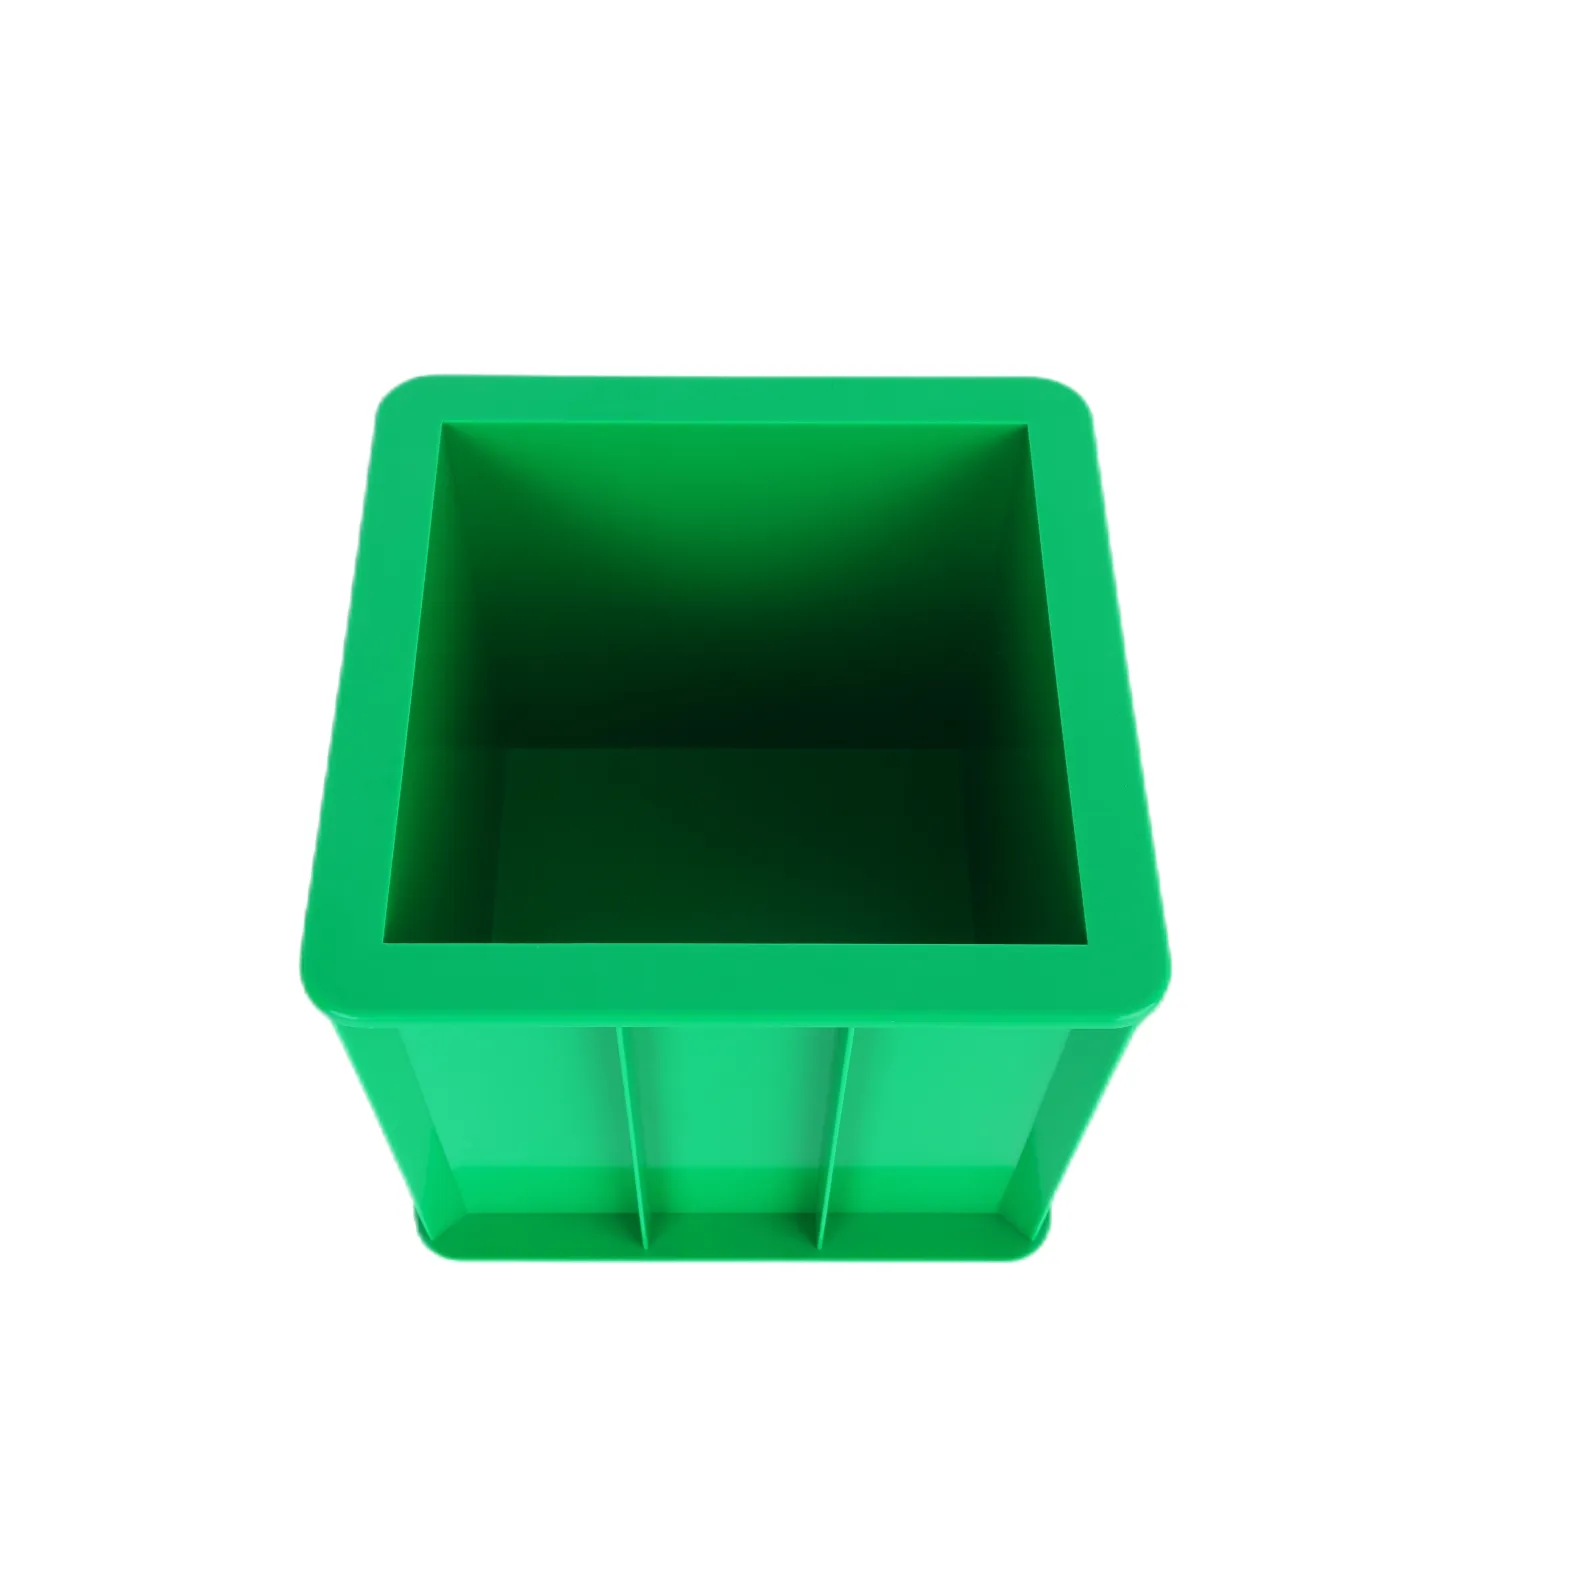 150mm Beton form Grüne Farbe Kunststoff Würfel Test leisten